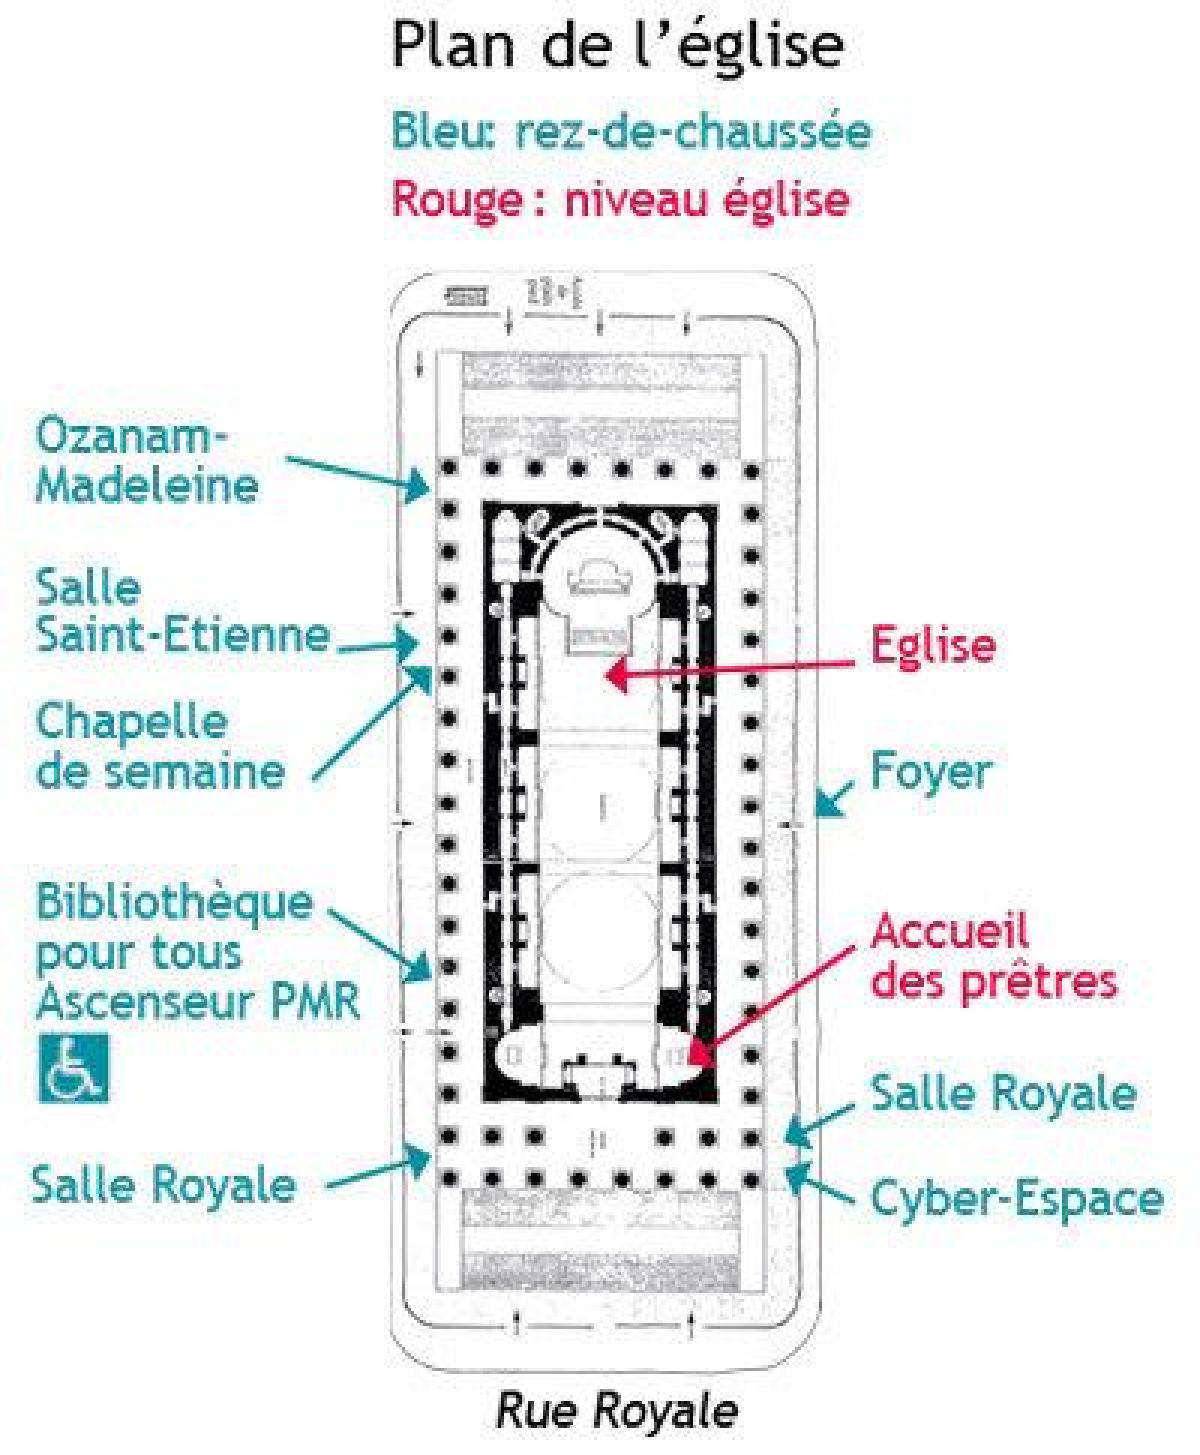 Peta Madeleine Paris